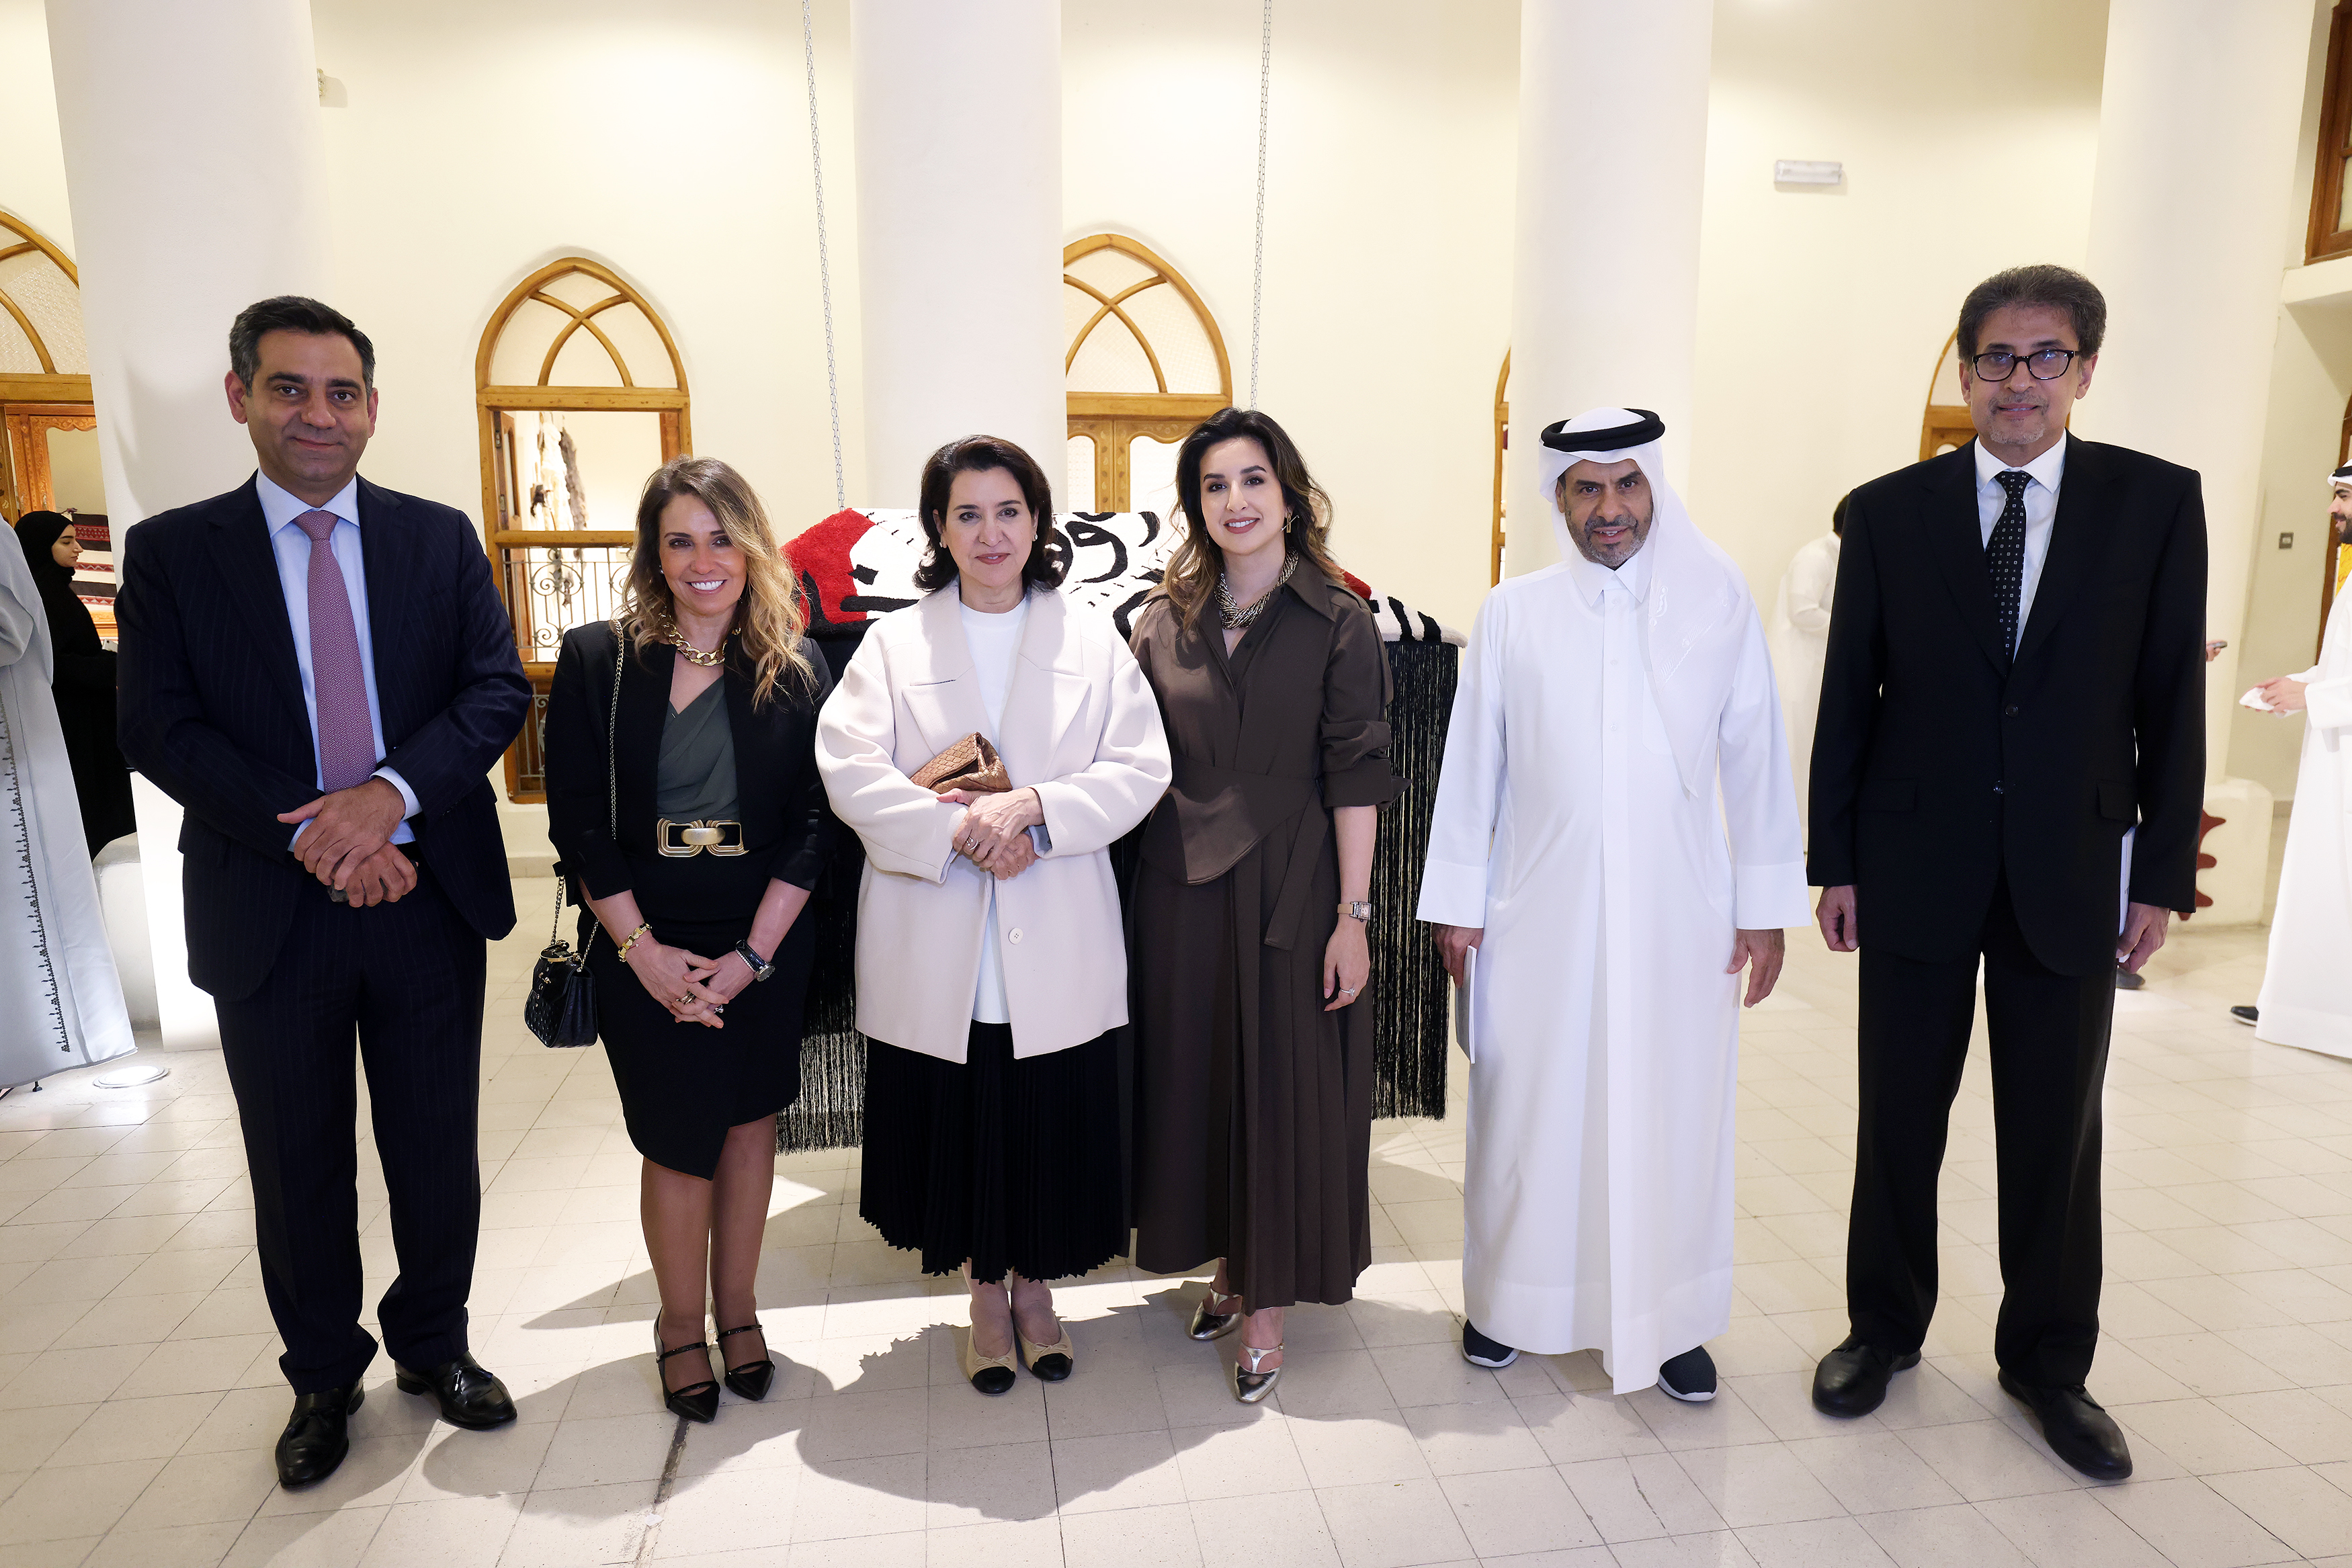 KUWAIT: Sheikha Altaf Salim Al-Ali Al-Sabah and her daughter Sheikha Bibi Duaij Al-Sabah (center) pose with diplomats during the exhibit. — Photos by Yasser Al-Zayyat